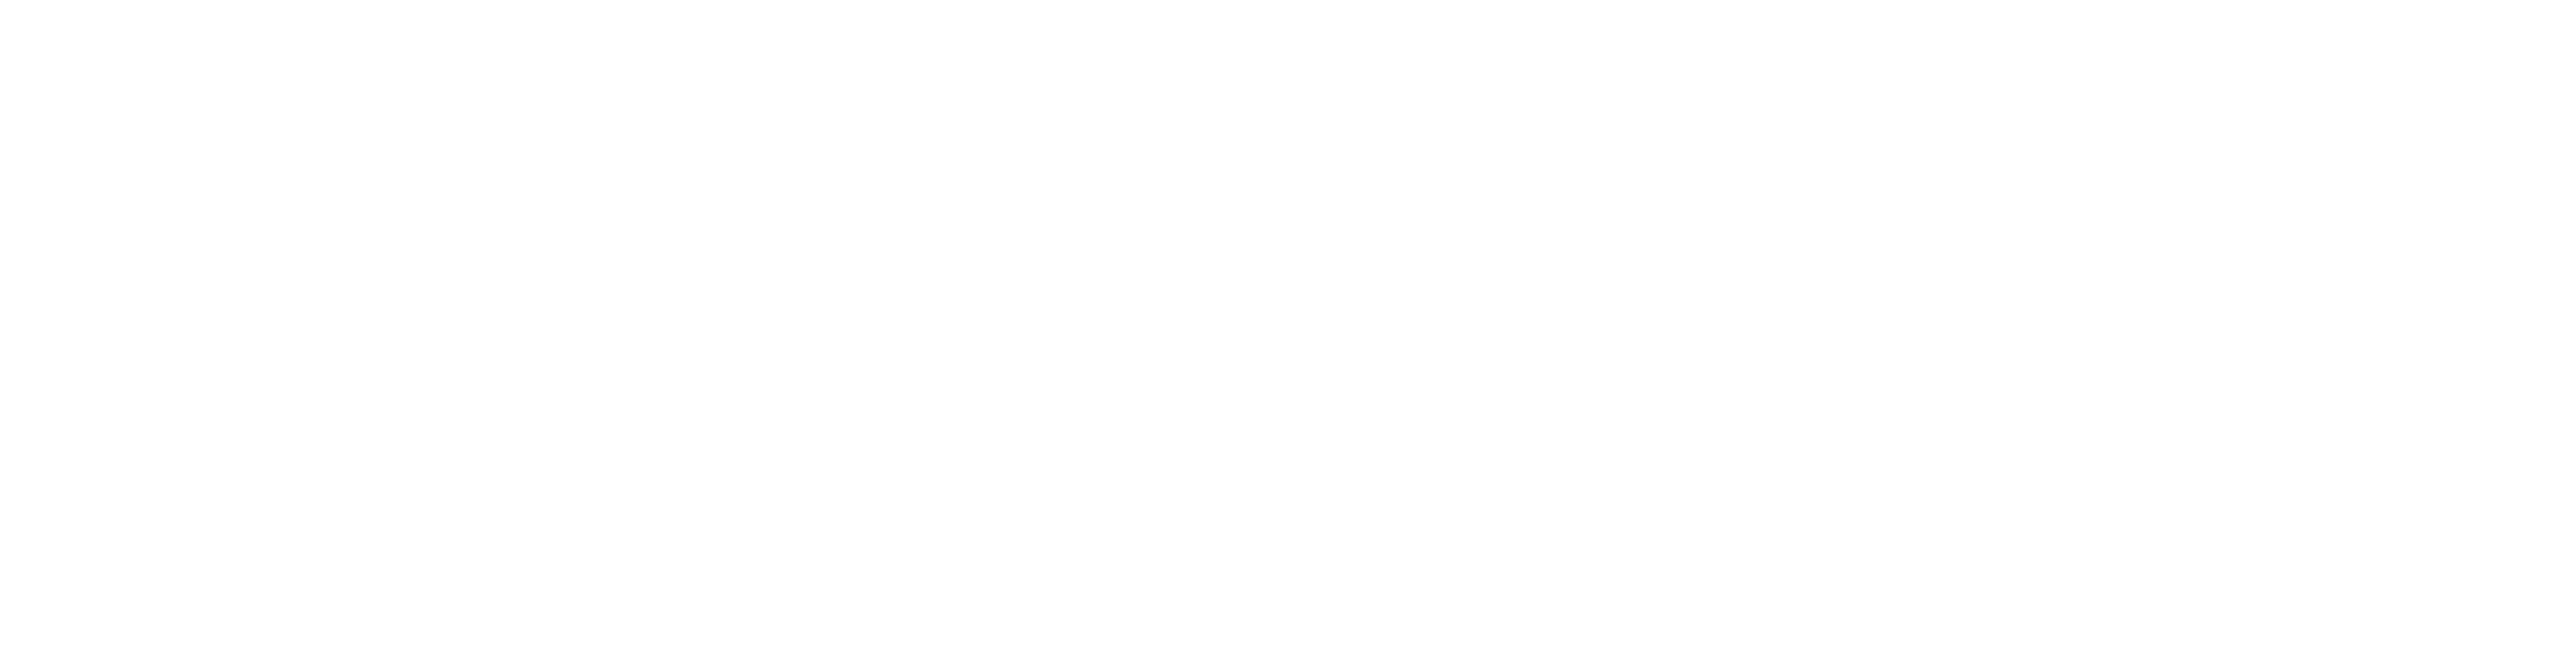 MyMyrbetriq Logo Image